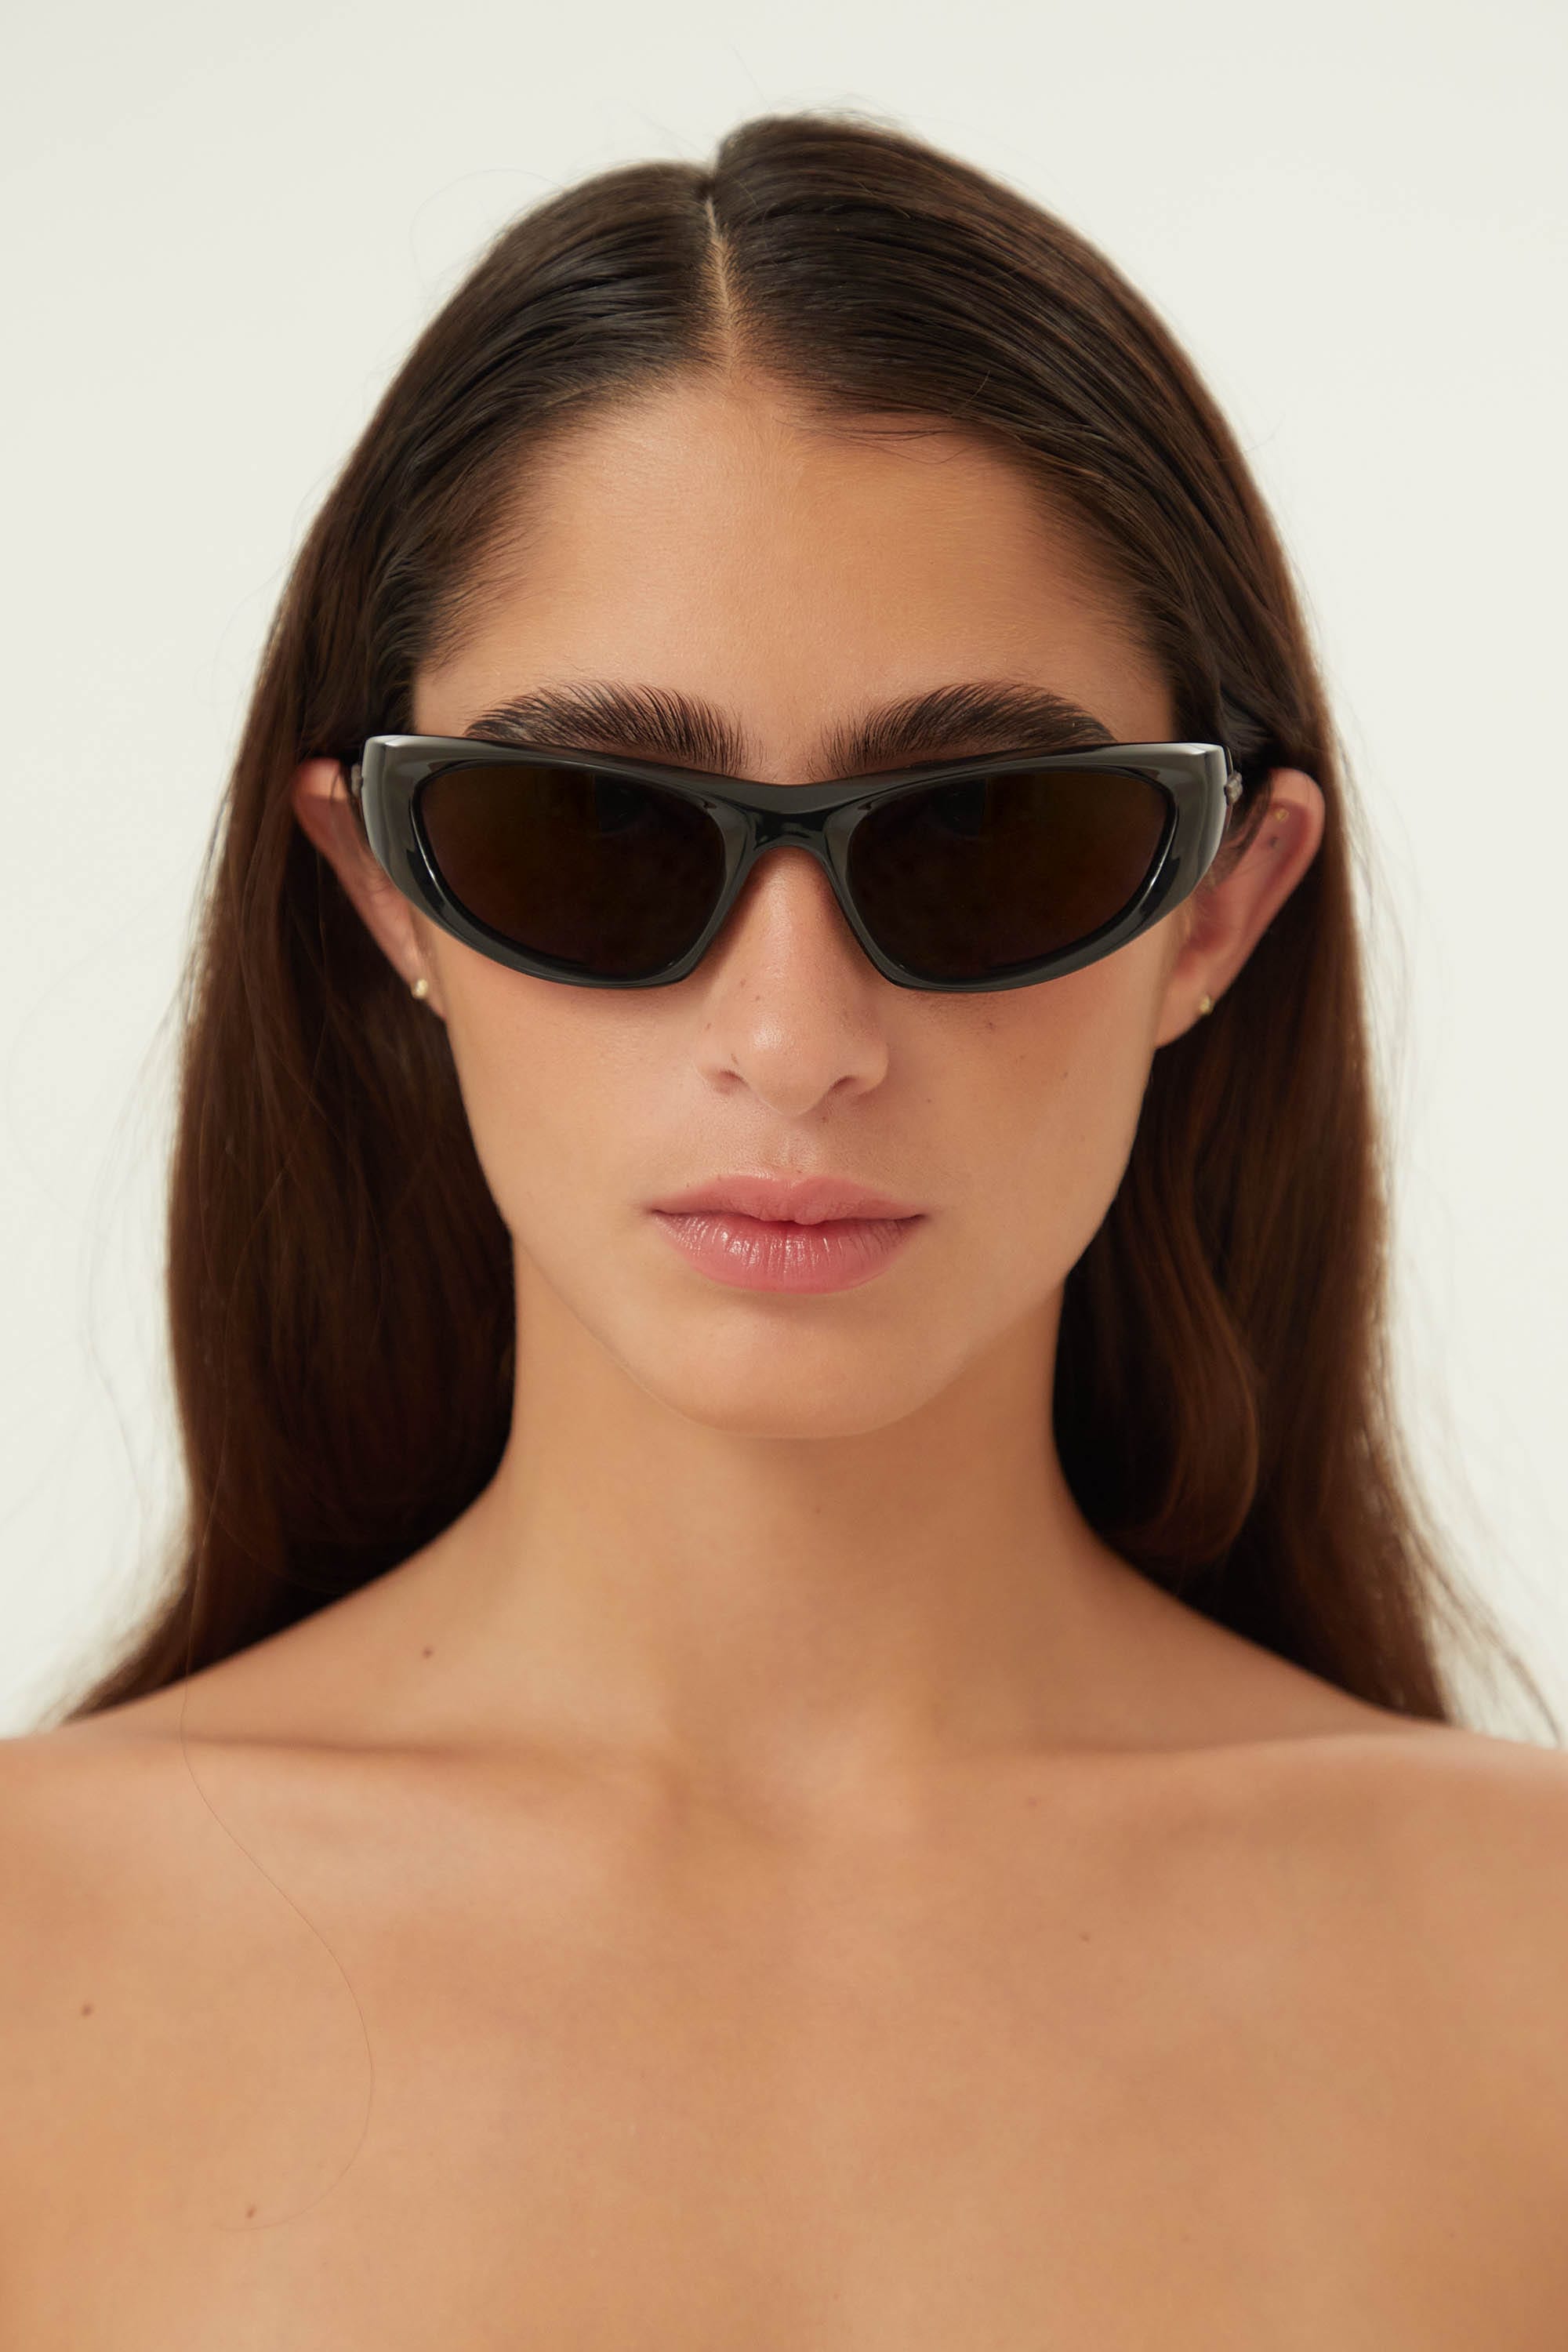 Bottega Veneta wrap around black sunglasses - Eyewear Club